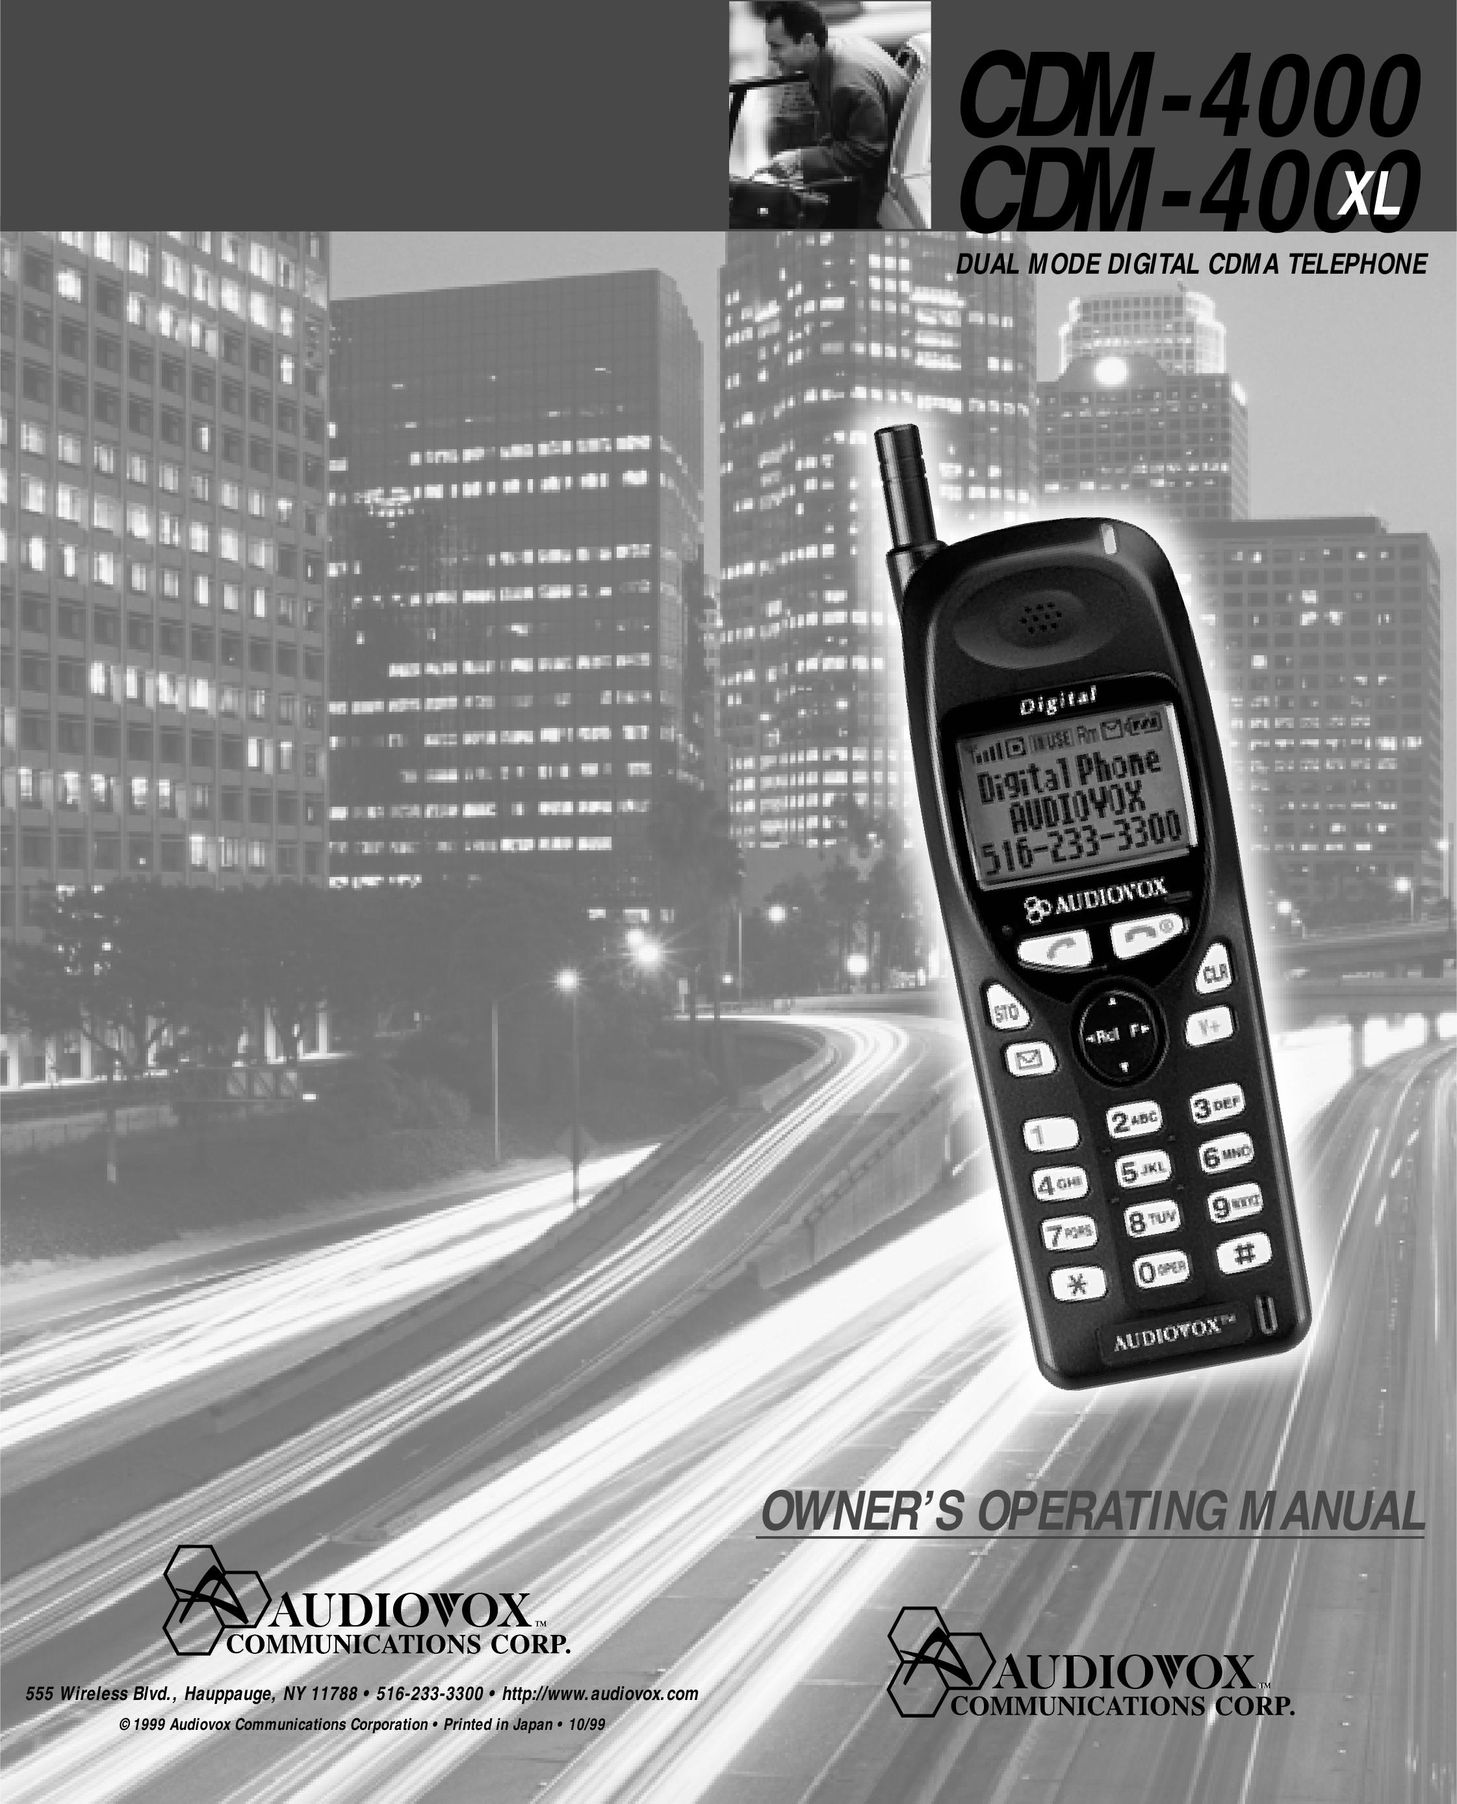 Audiovox CDM-4000 Cell Phone User Manual